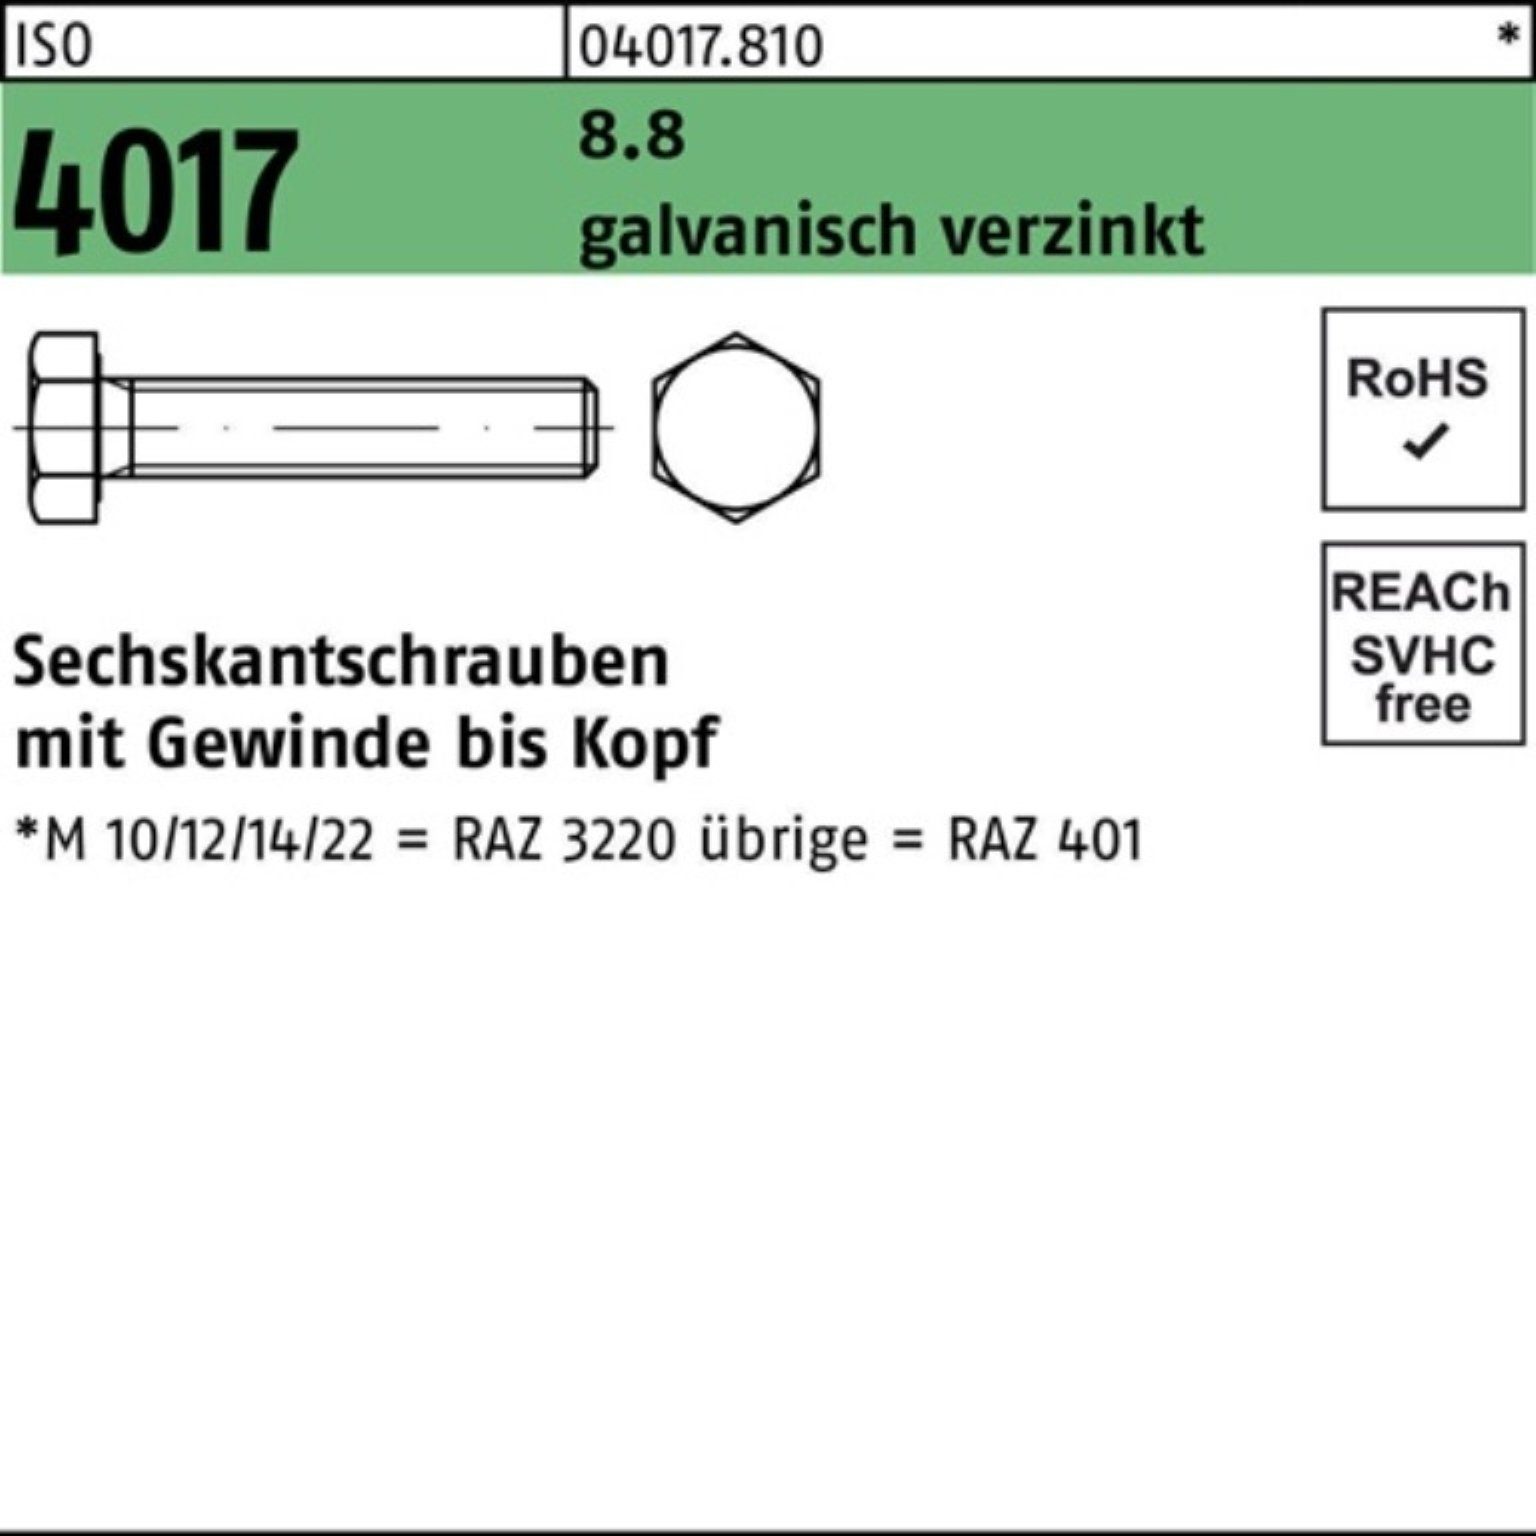 VG St Sechskantschraube Bufab M5x 4017 8.8 ISO 200 Sechskantschraube galv.verz. 45 200er Pack